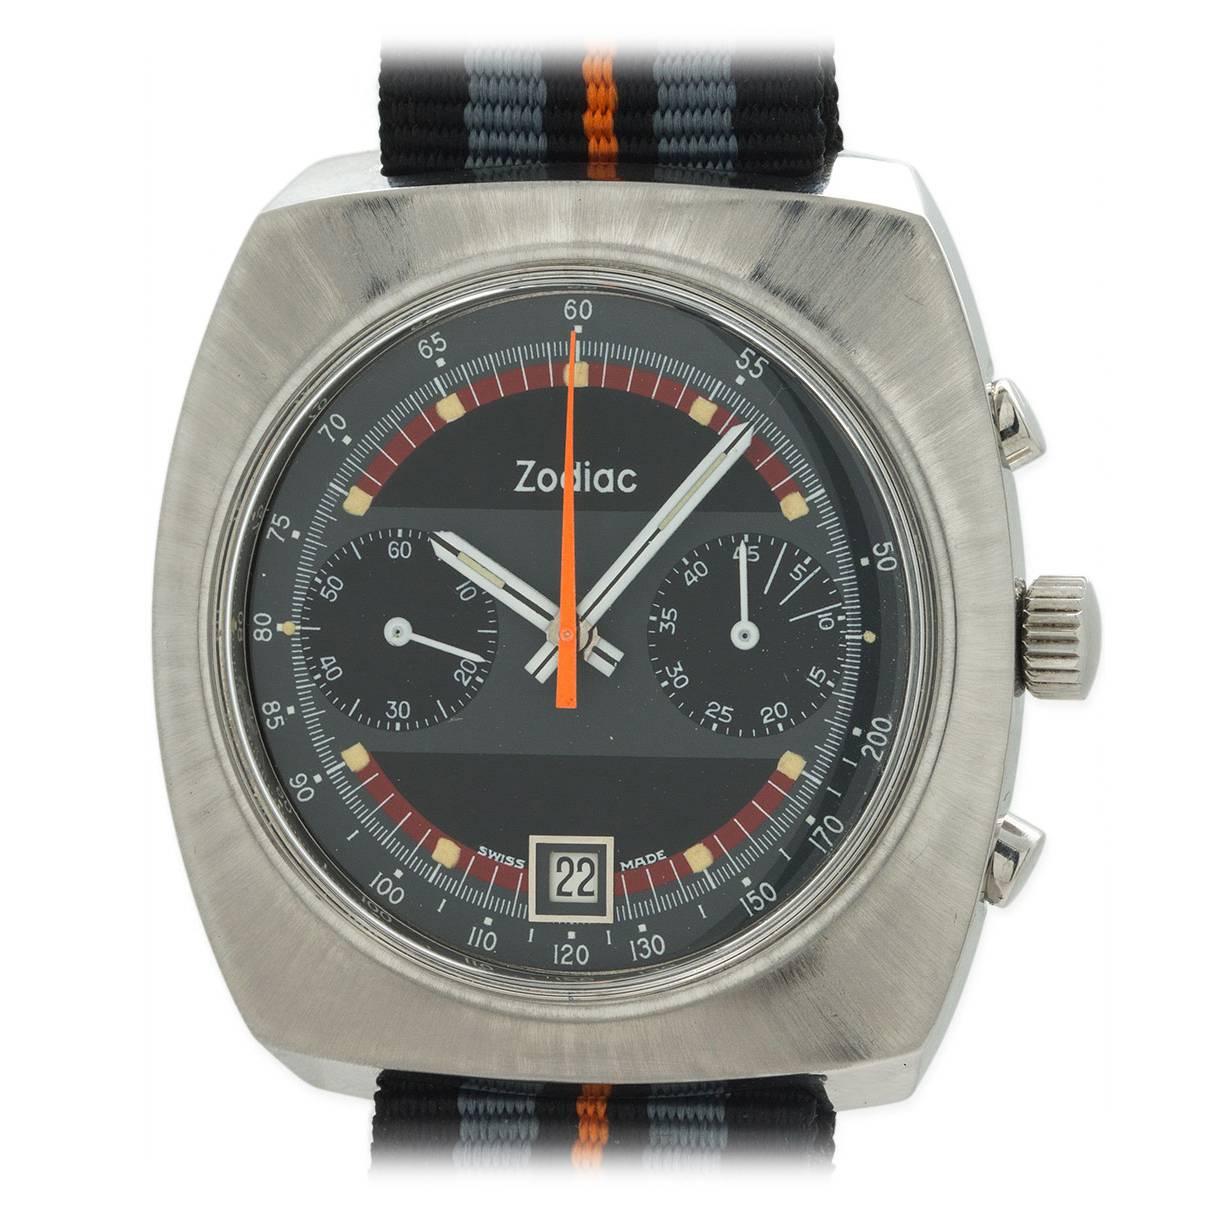 Zodiac Stainless Steel Chronograph Wristwatch circa 1970s For Sale